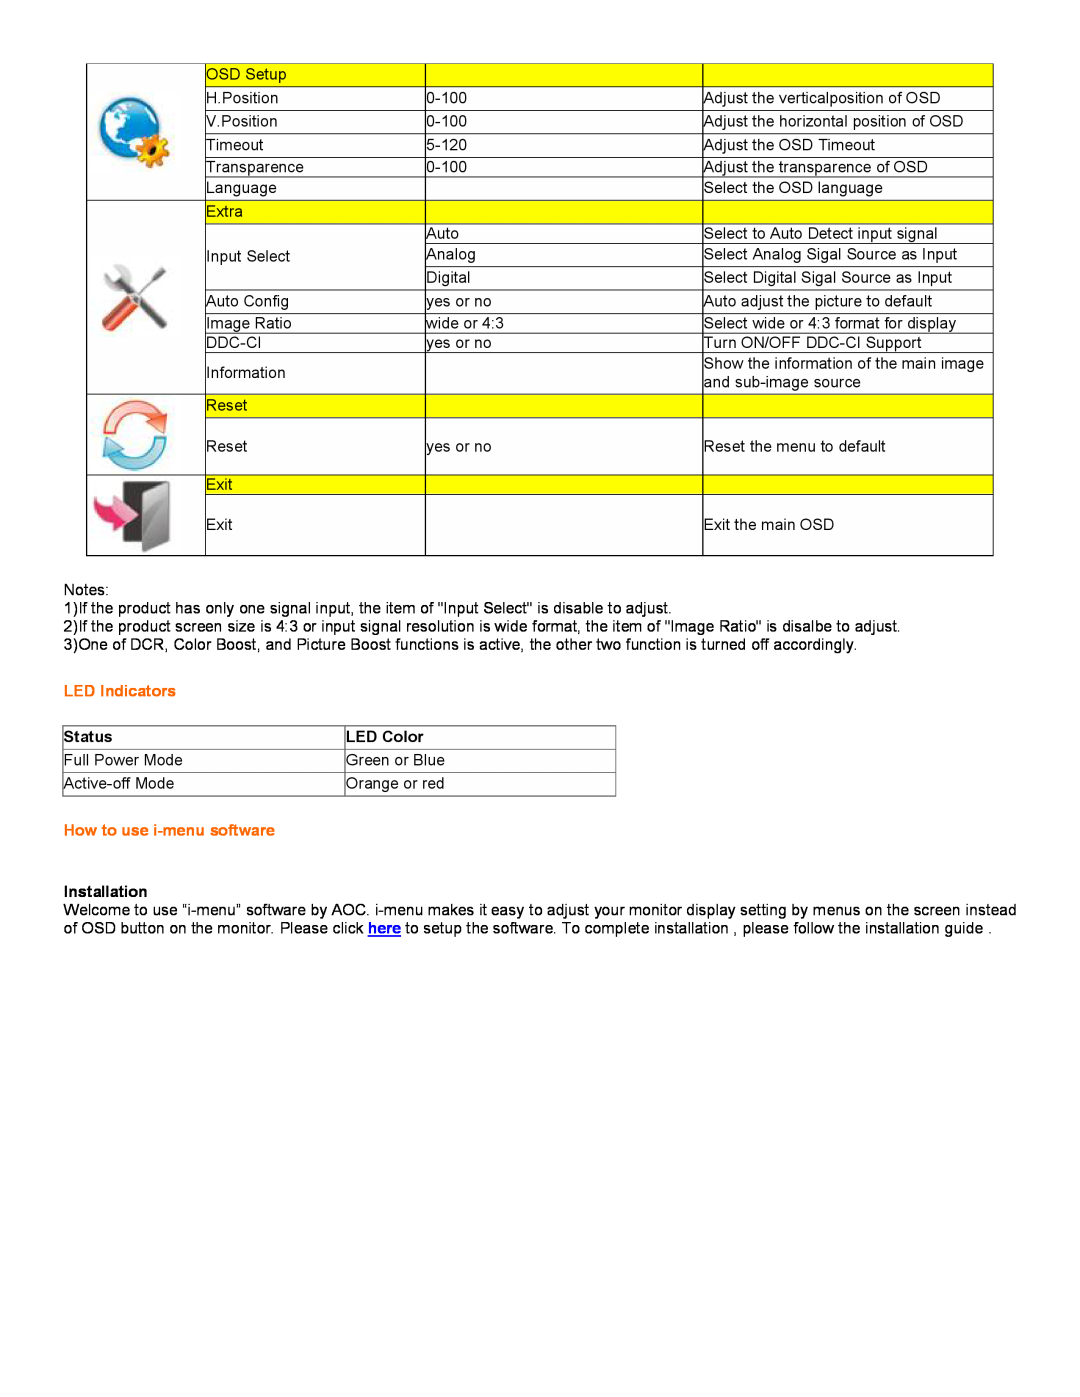 Univex 2217V user manual LED Indicators, How to use i-menu software 